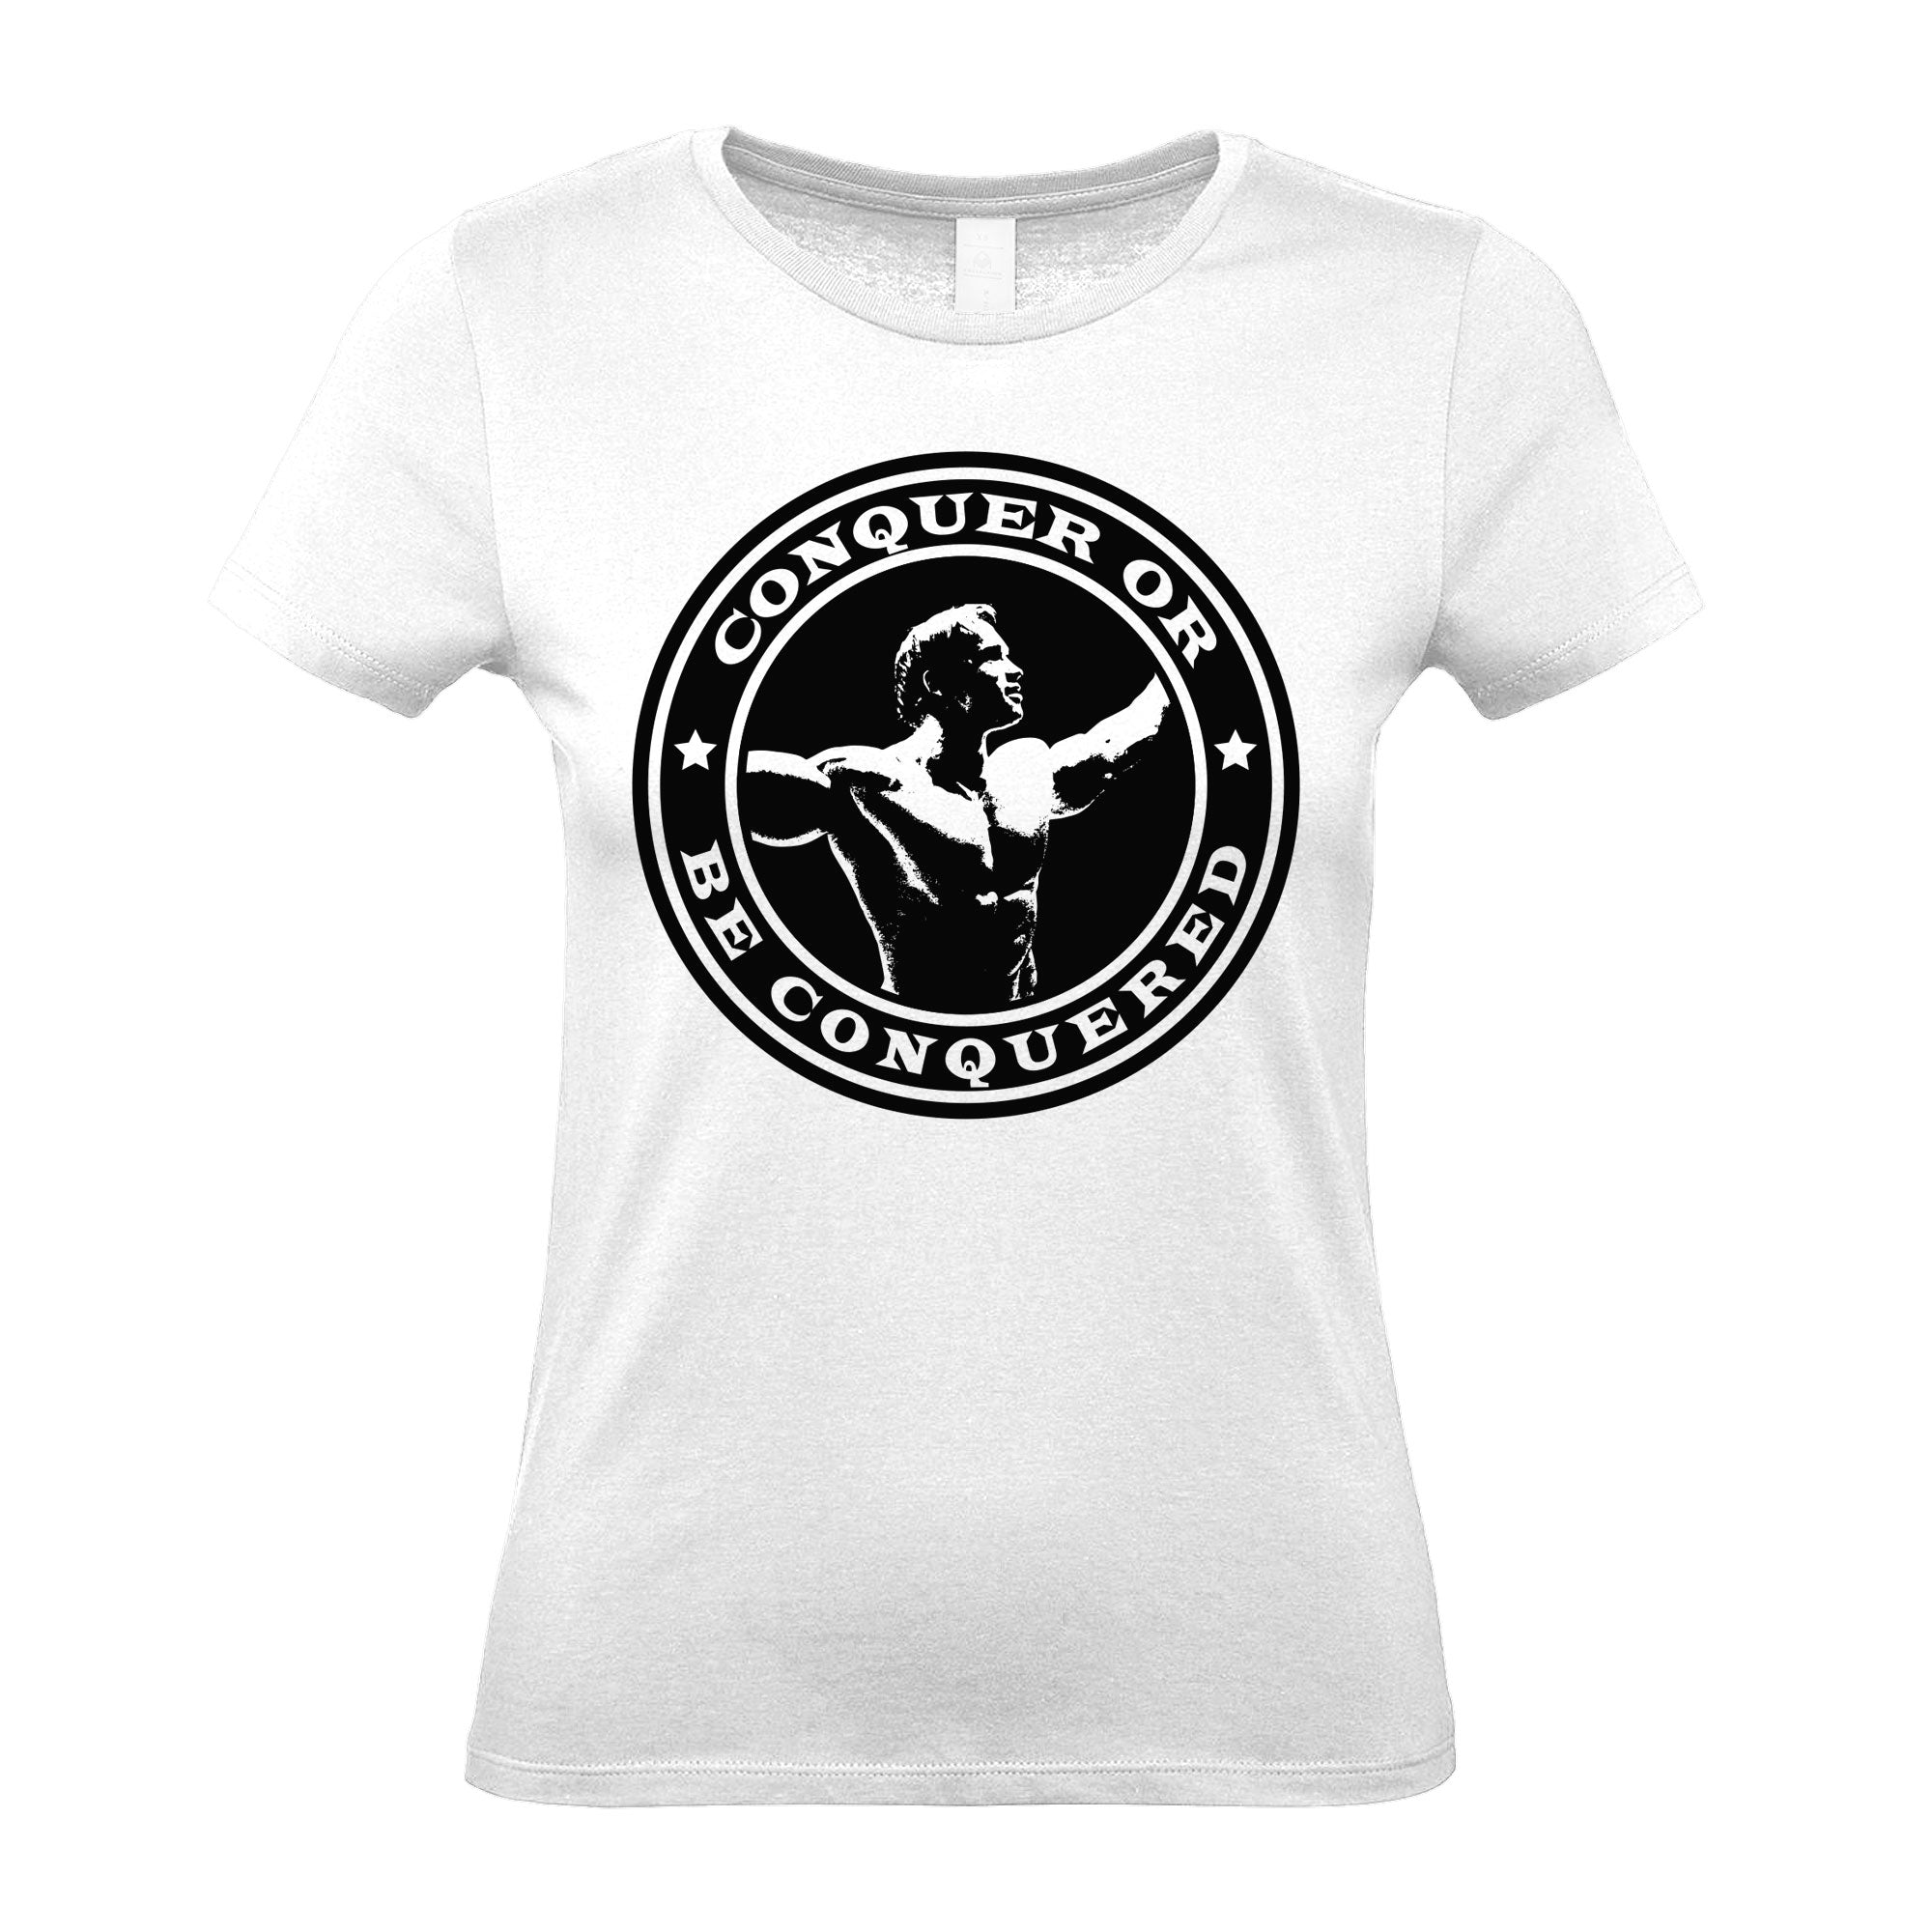 Arnold Conquer - Women's Gym T-Shirt